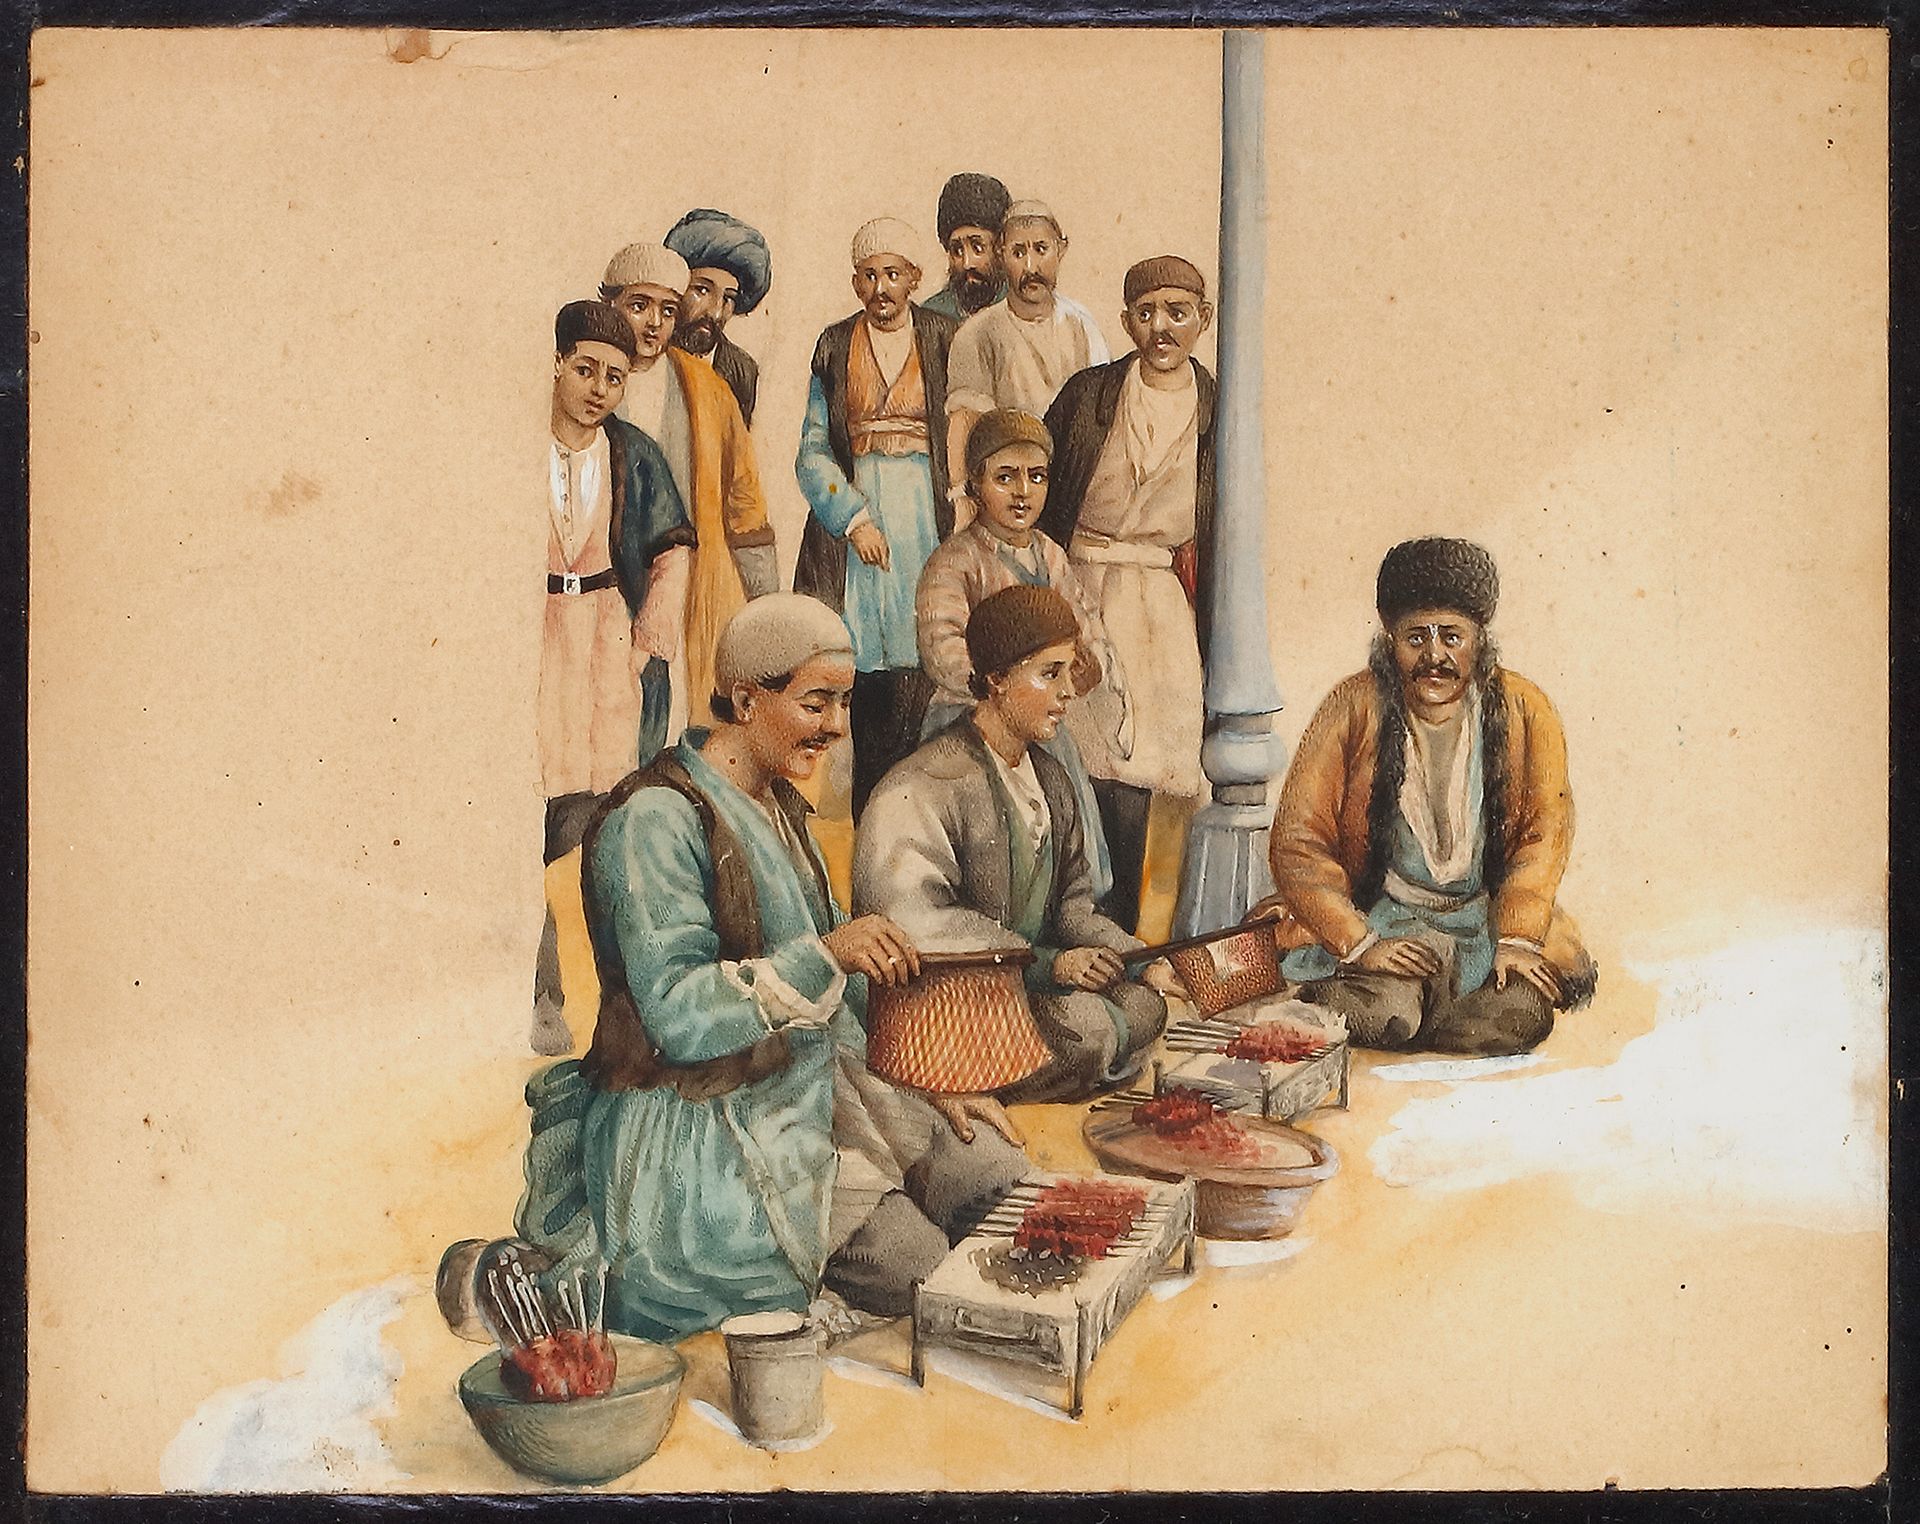 ROASTING ON THE MARKET, QAJAR, IRAN, 19TH CENTURY 绘画

16.5 cm. By 20.5 cm.